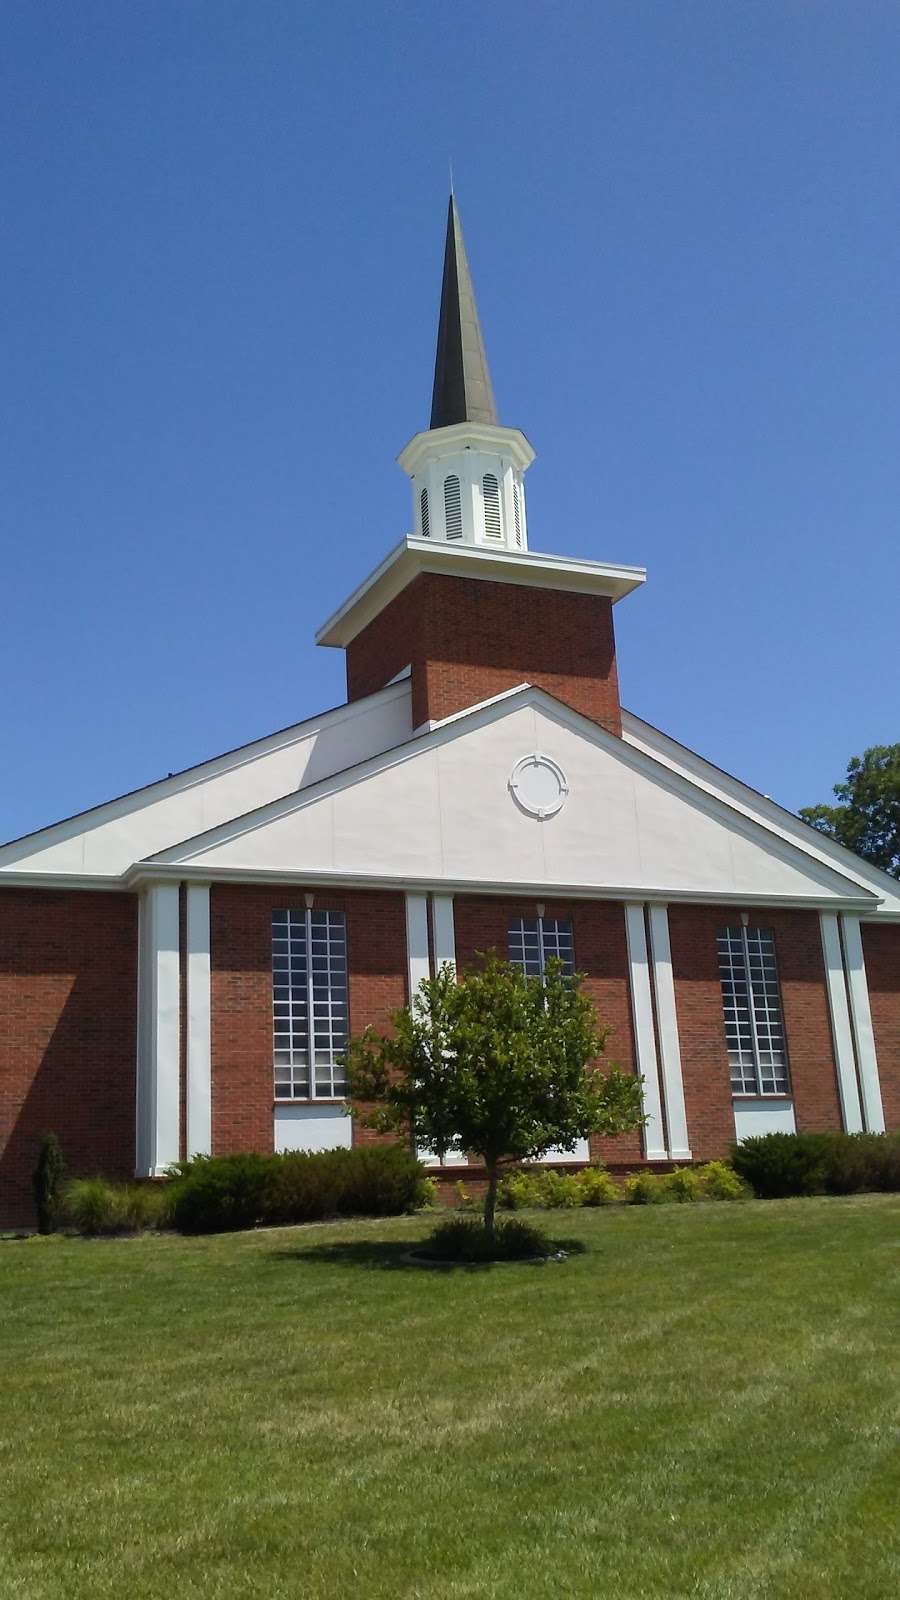 First Baptist Church of Shawnee | 11400 Johnson Dr, Shawnee, KS 66203, USA | Phone: (913) 268-6500